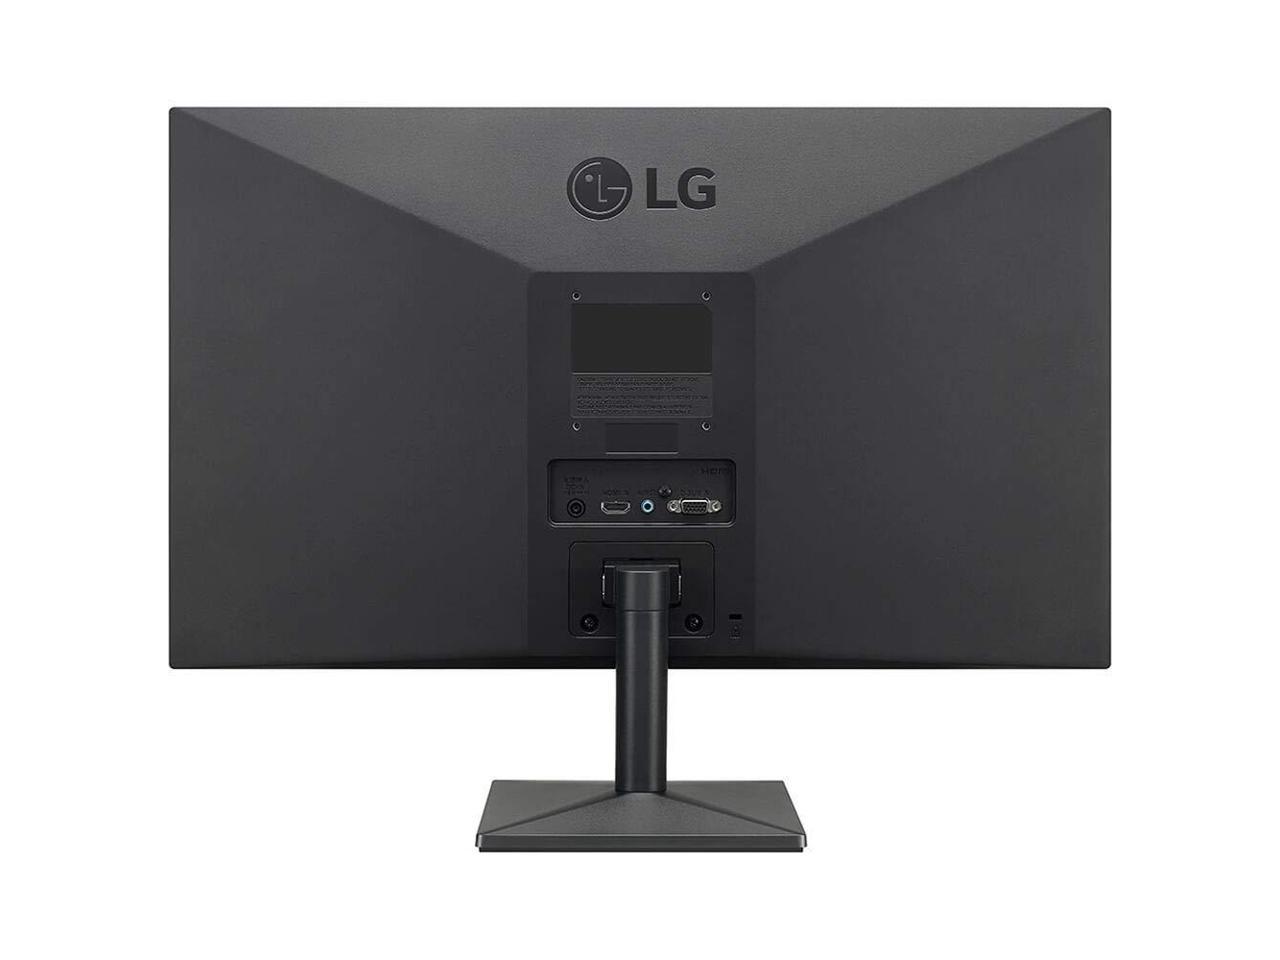 LG 24MK430H-B 24" (Actual size 23.8") Full HD 1920 x 1080 VGA HDMI AMD Radeon FreeSync Flicker Safe Anti-Glare Backlit LED IPS Monitor